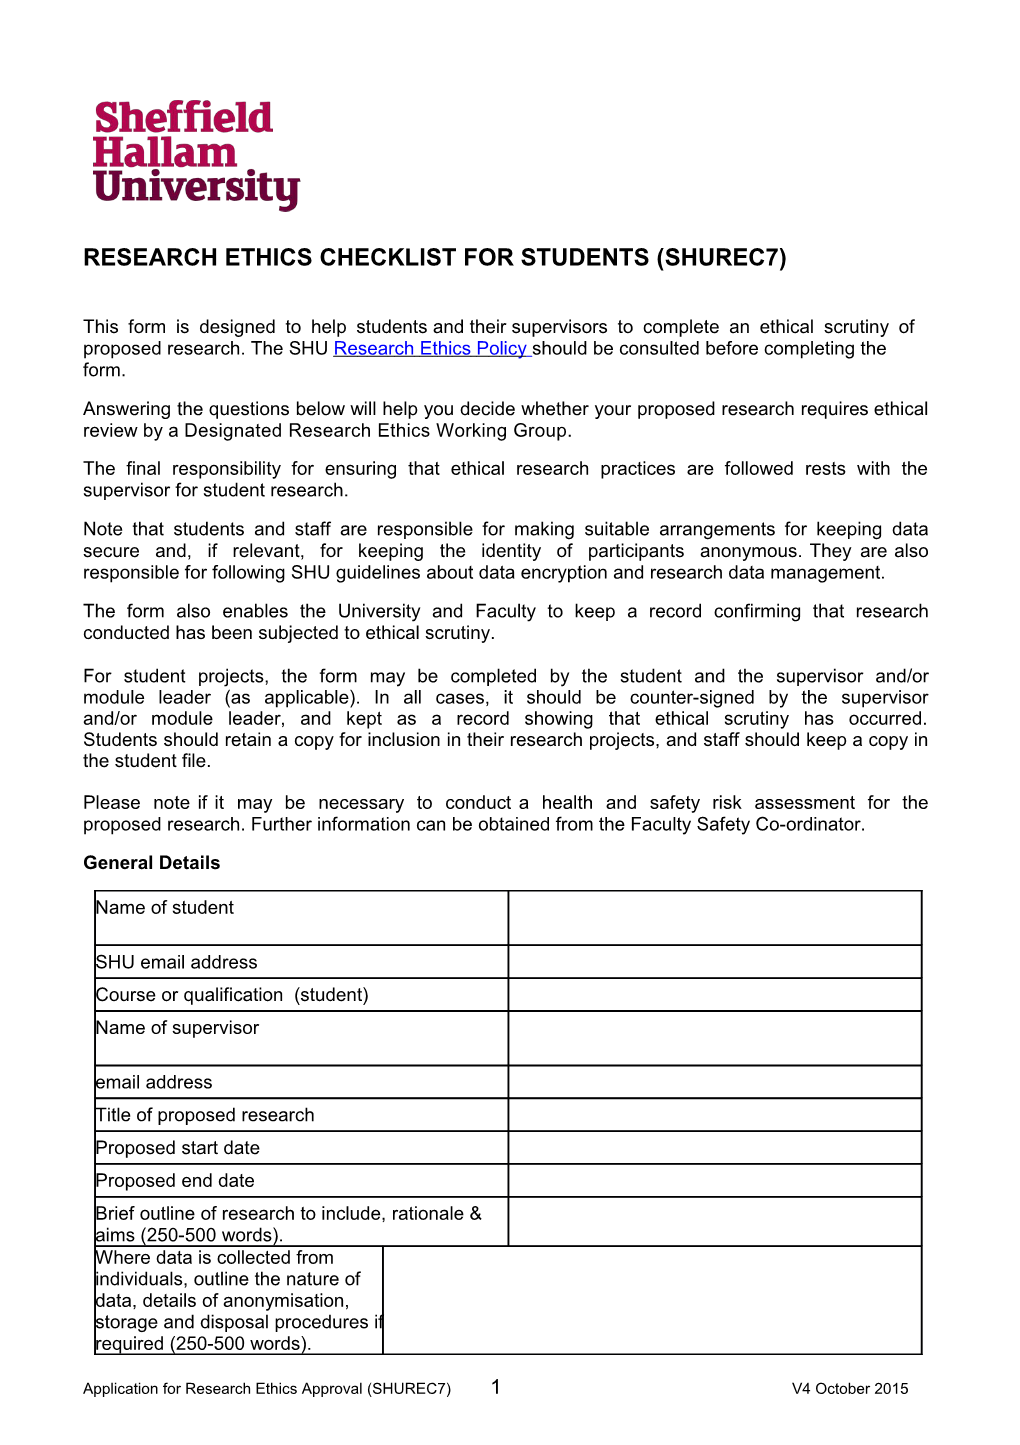 Research Ethicschecklist for Students (Shurec7)